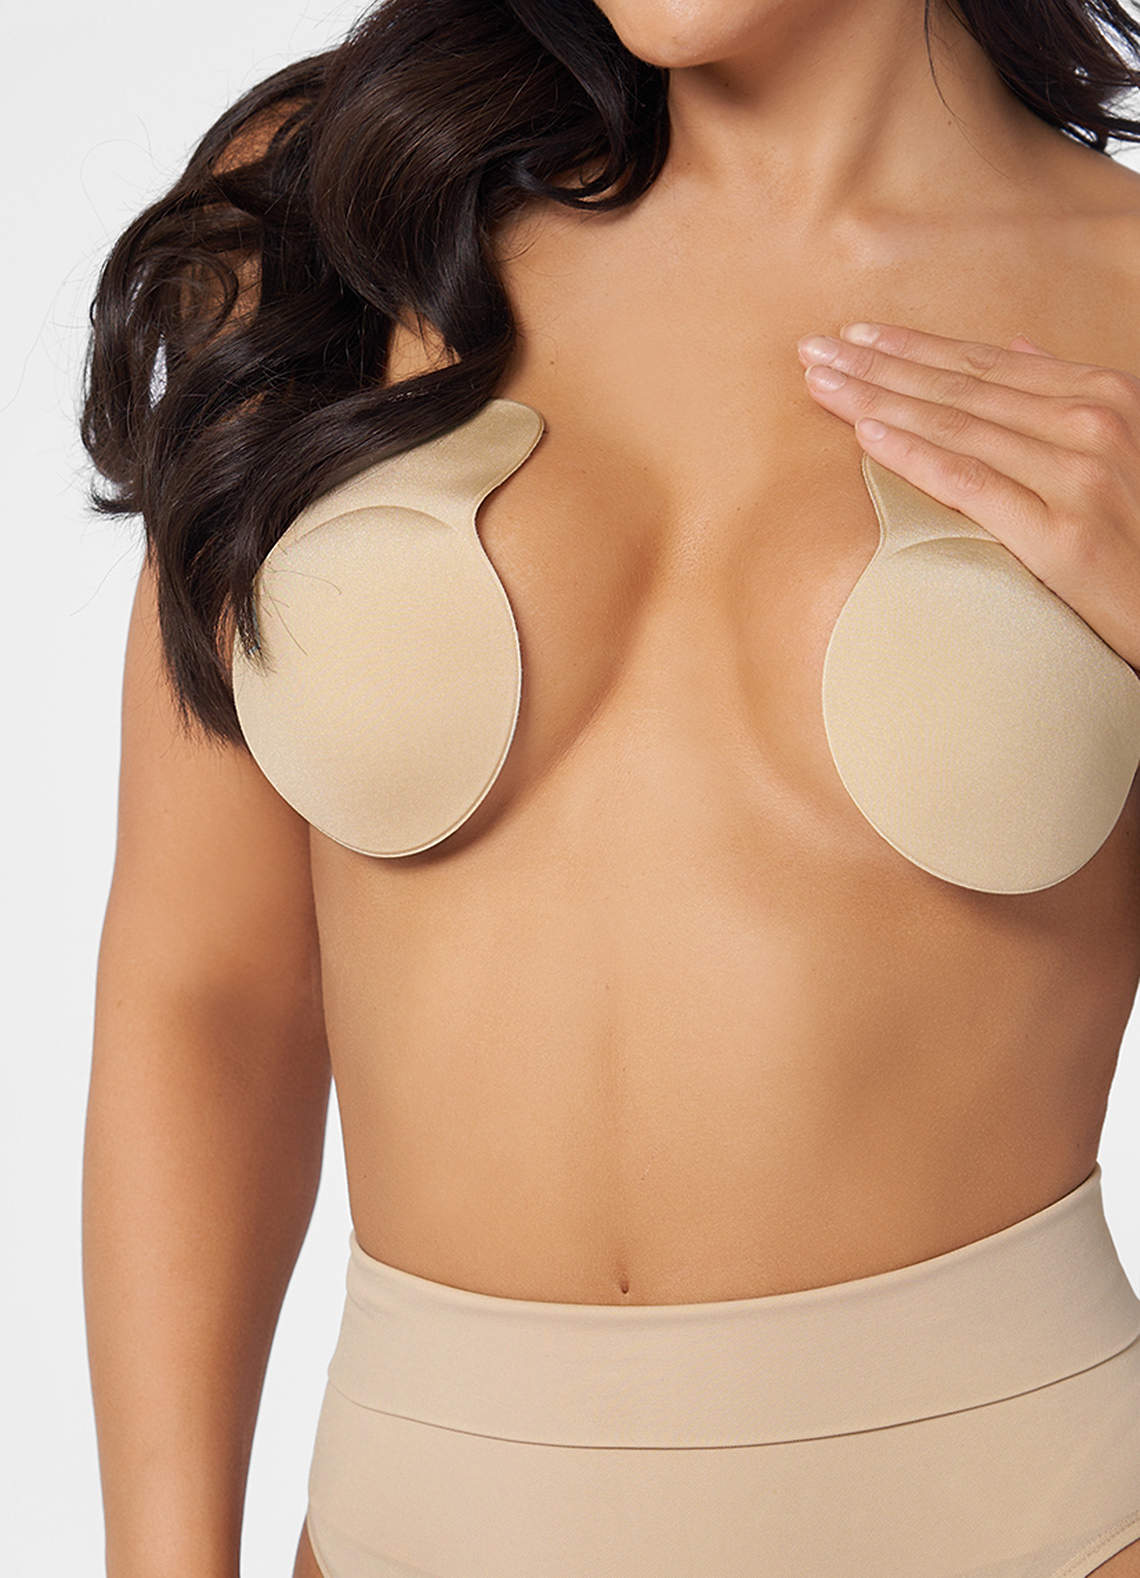 Salariyee Breast Lift Tape and Nipple Covers